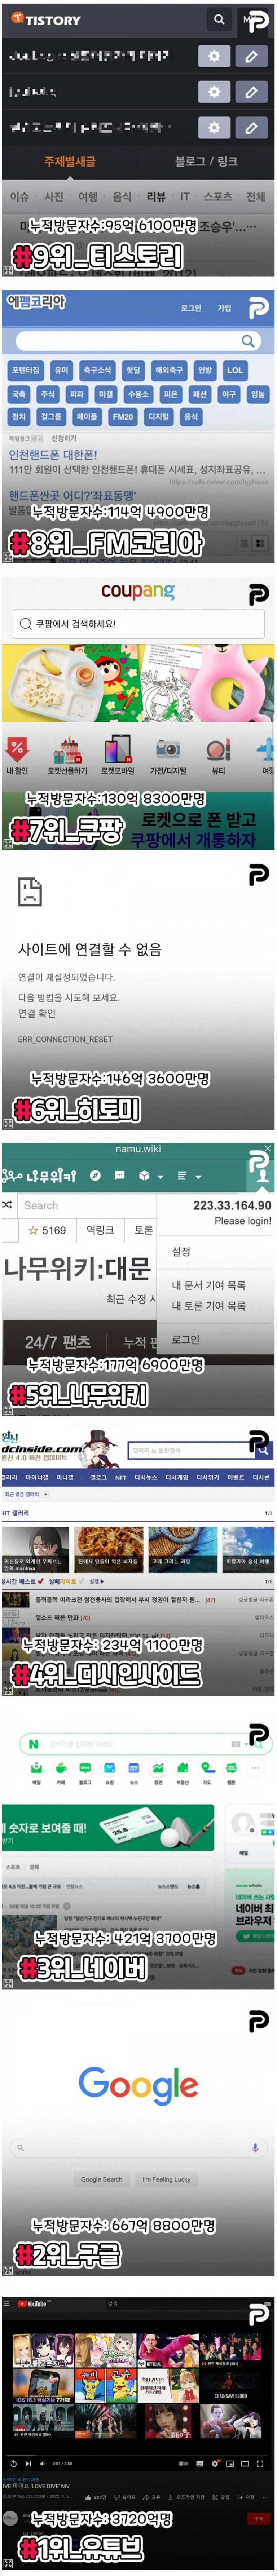 FireShot Capture 479 - 한국에서 가장 많이 접속한 웹사이트 - www.etoland.co.kr.png